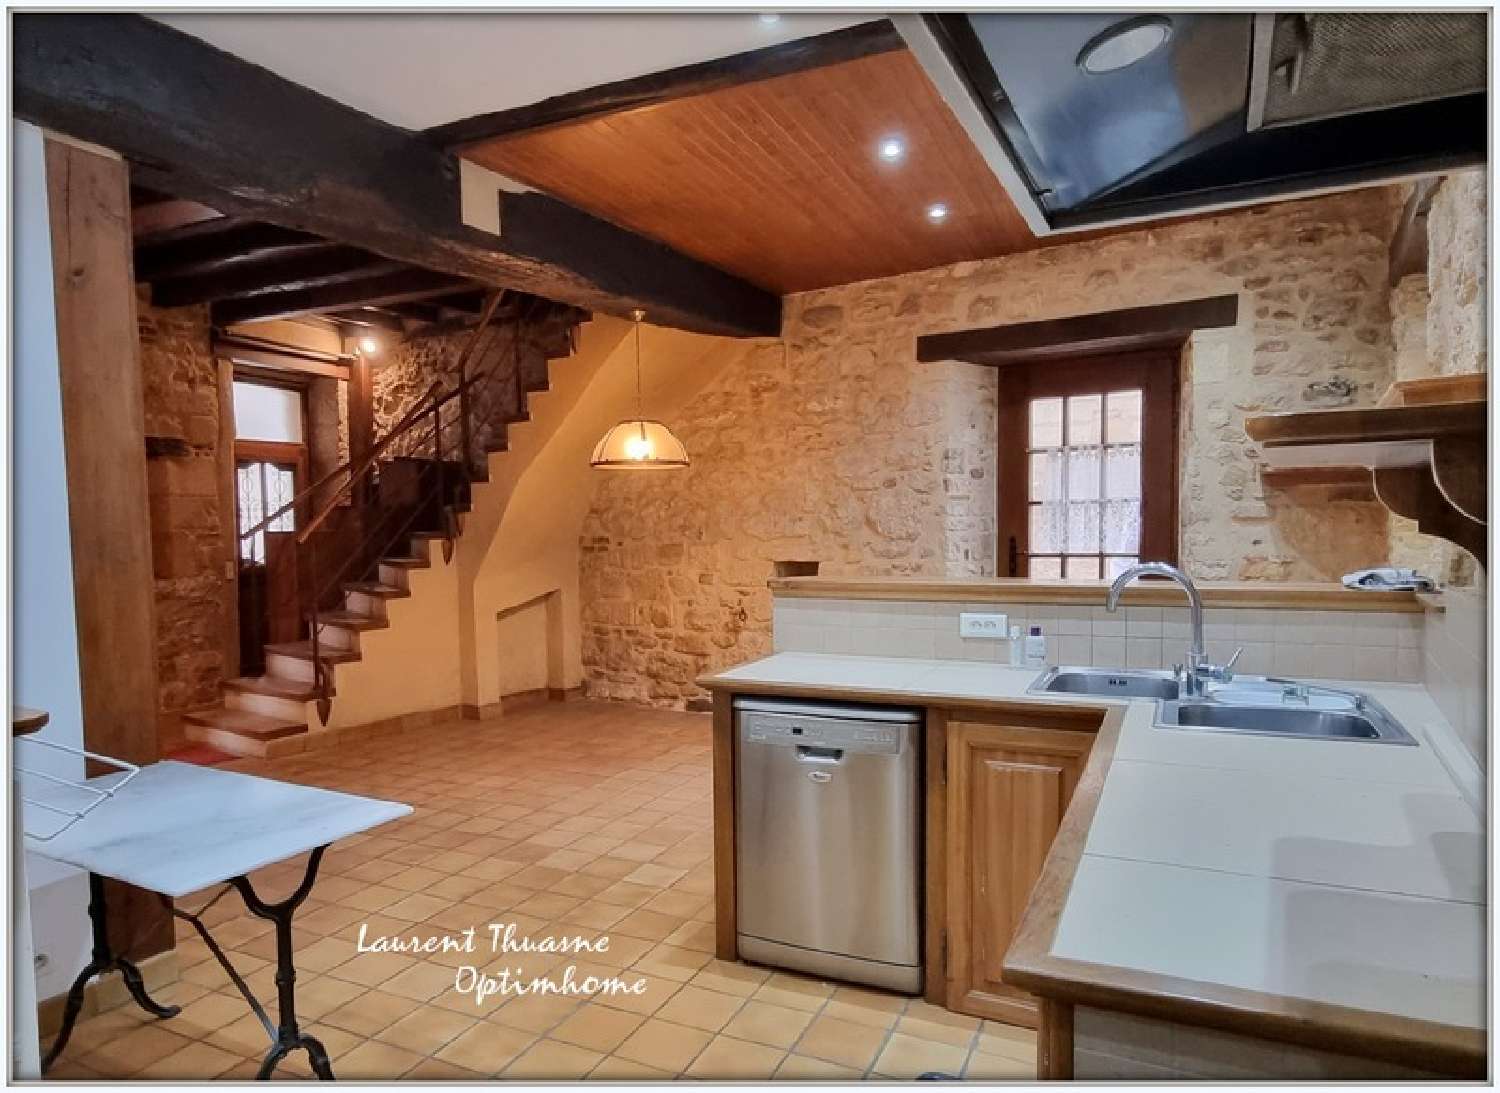  à vendre maison Bergerac Dordogne 3